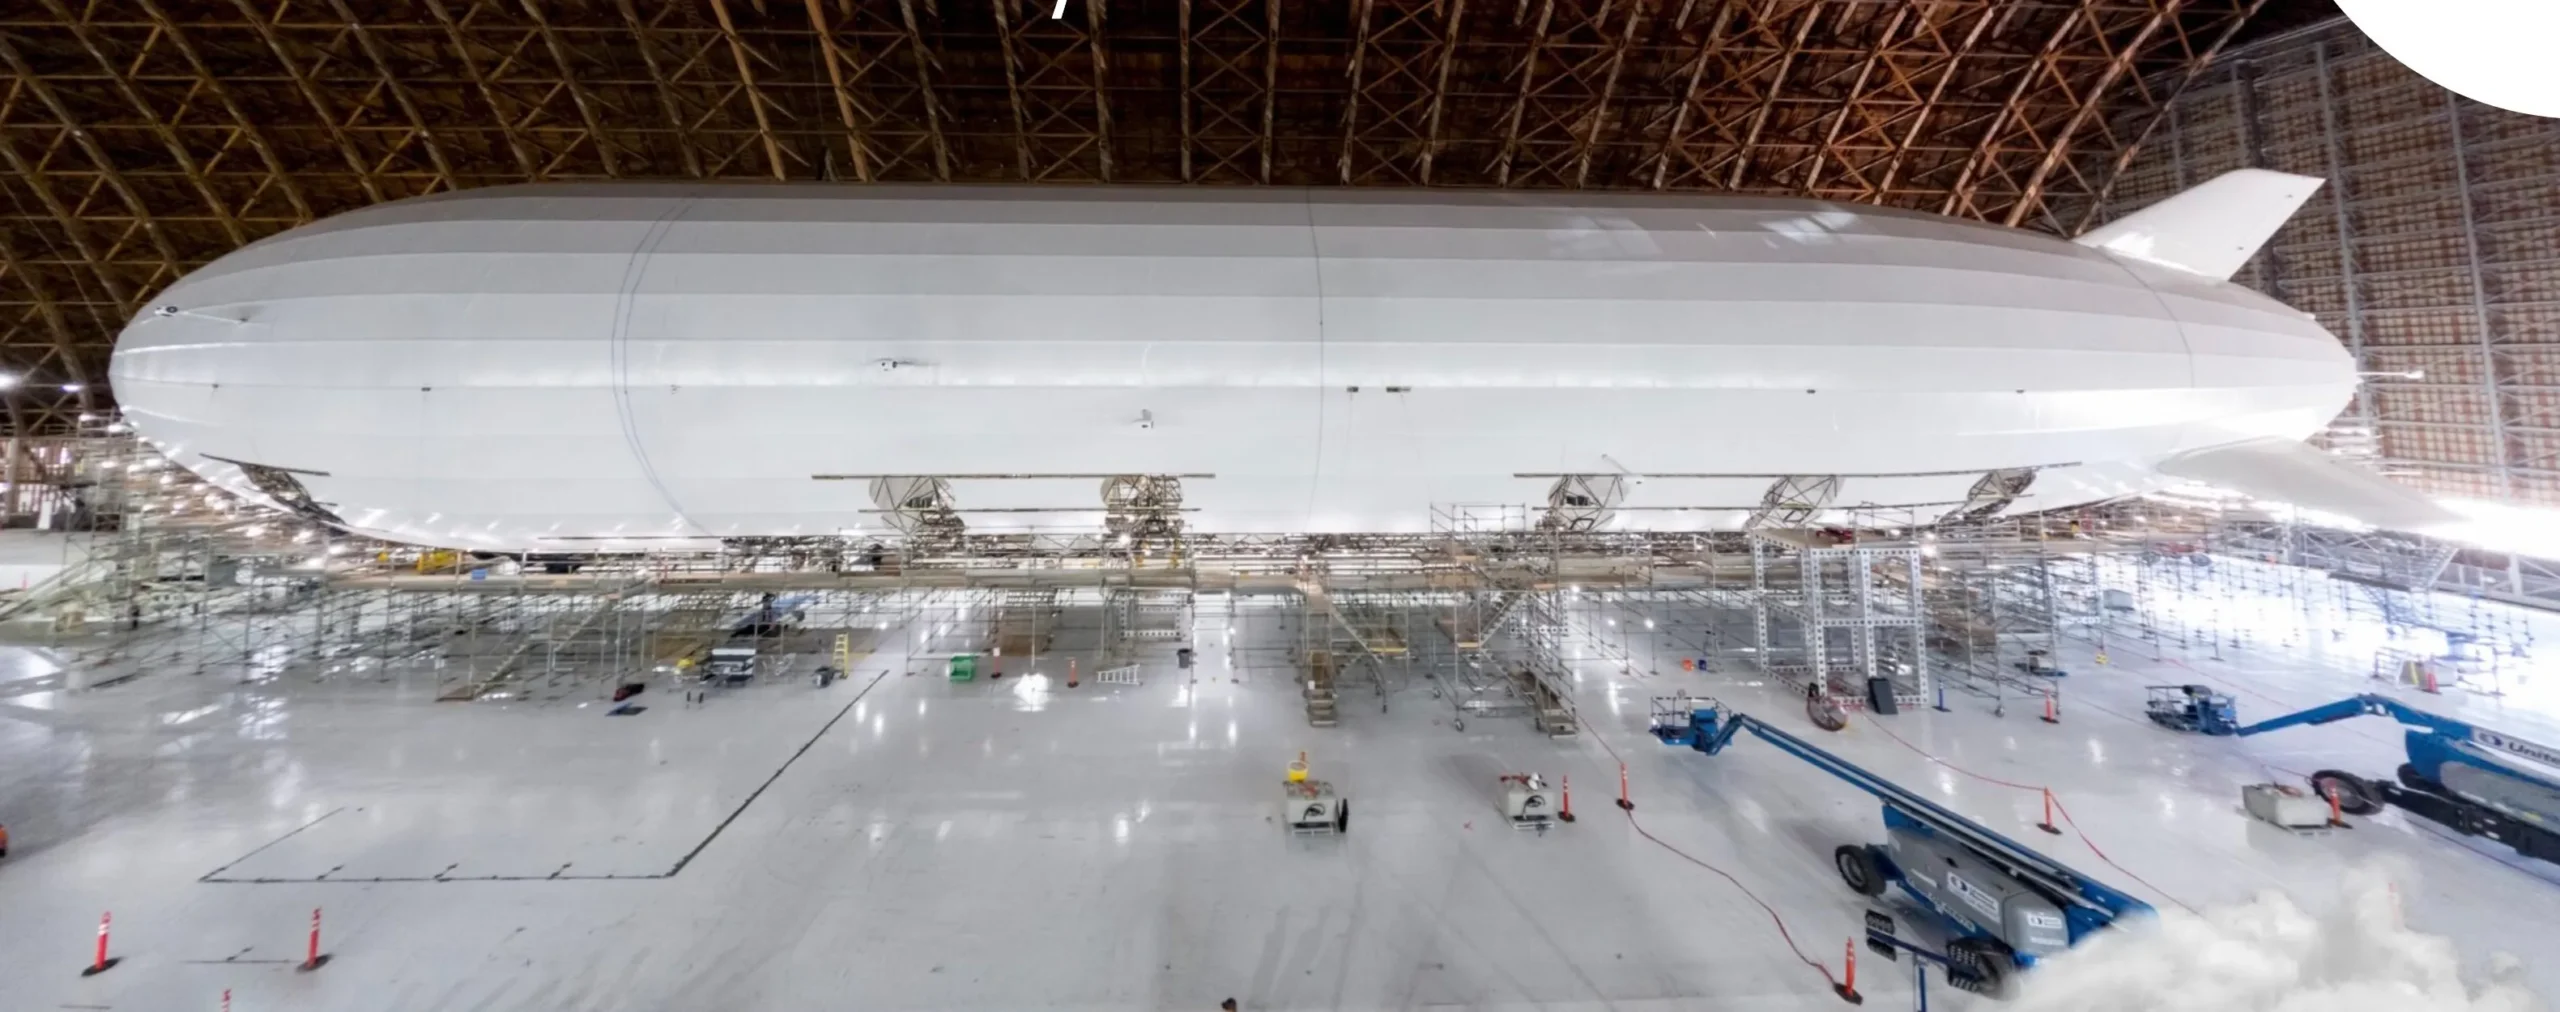 Google-backed airship: World’s largest, 400 feet—twice Boeing 747